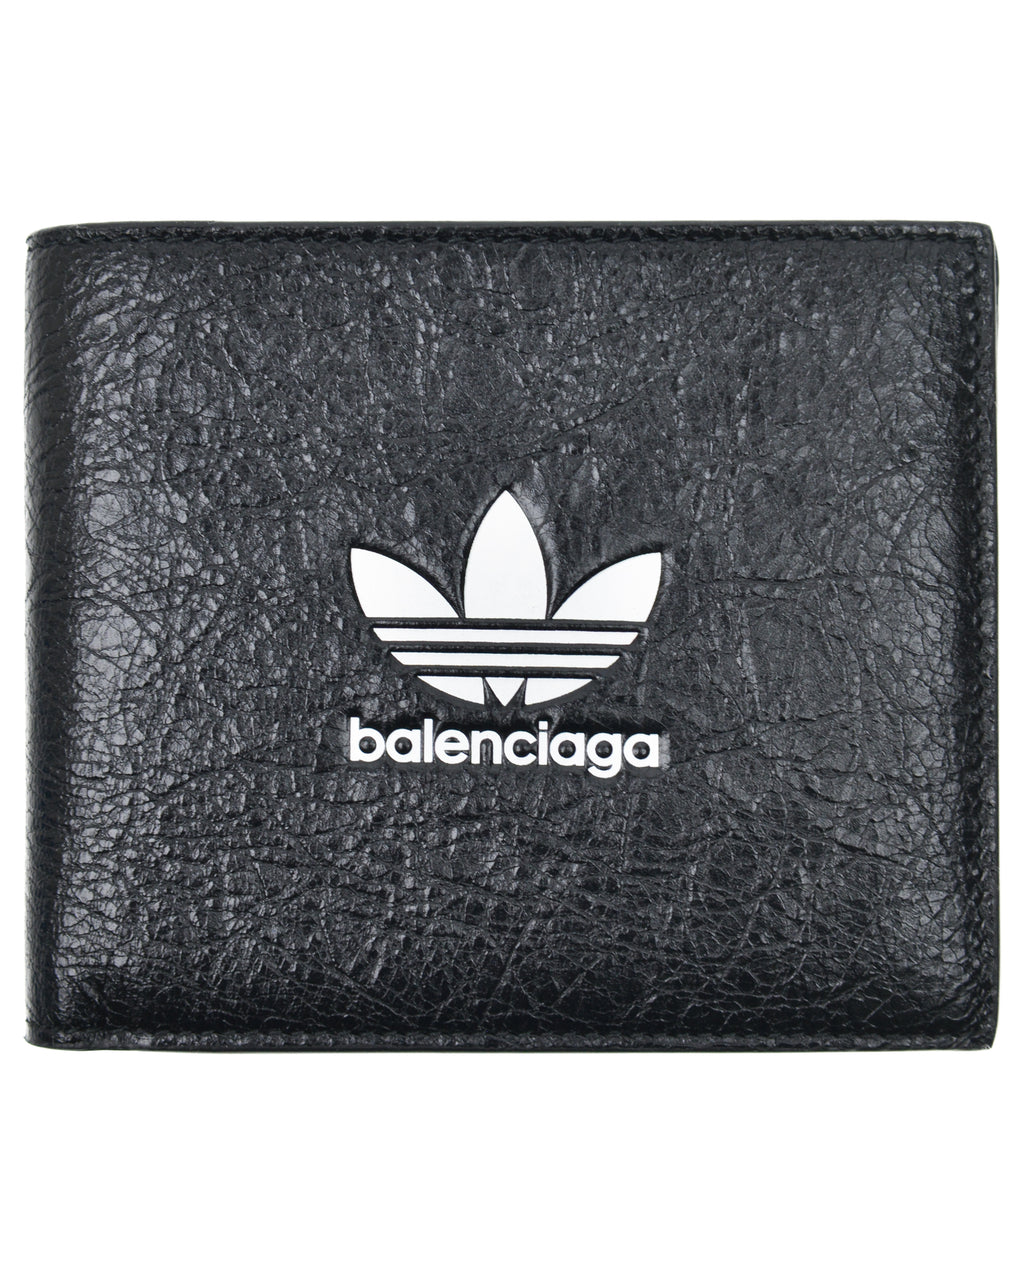 Balenciaga x Adidas Square Folded Wallet